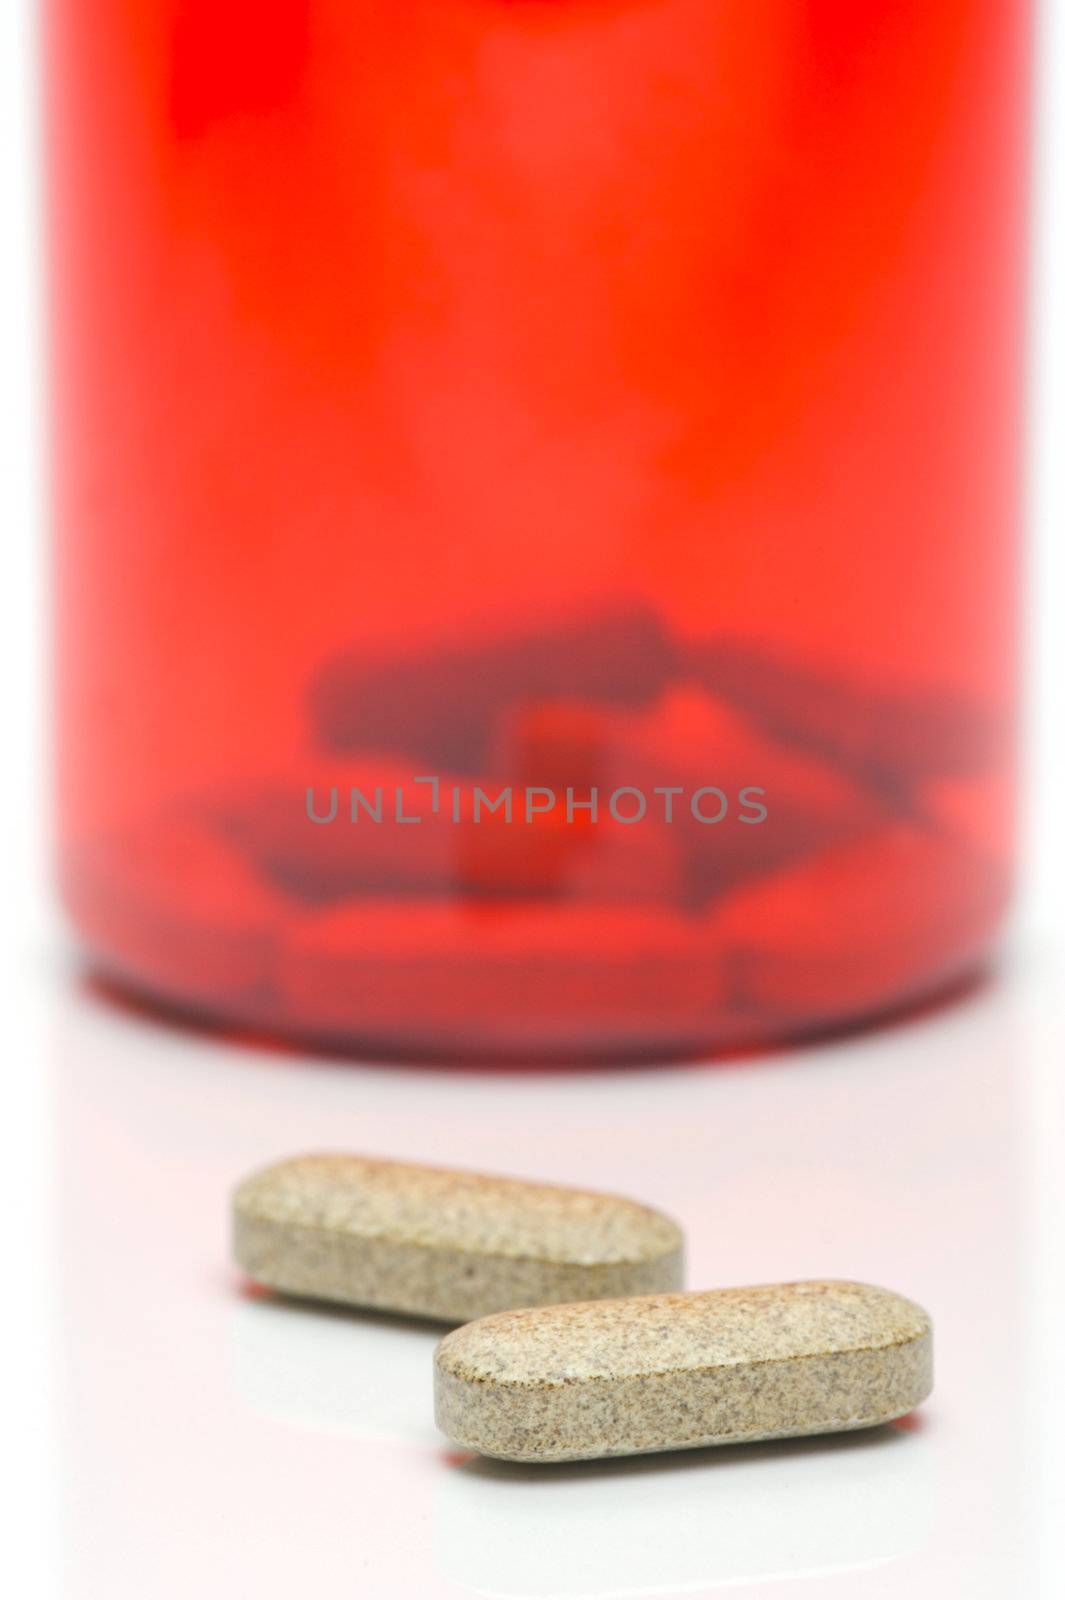 Prescription Tablets by Kitch